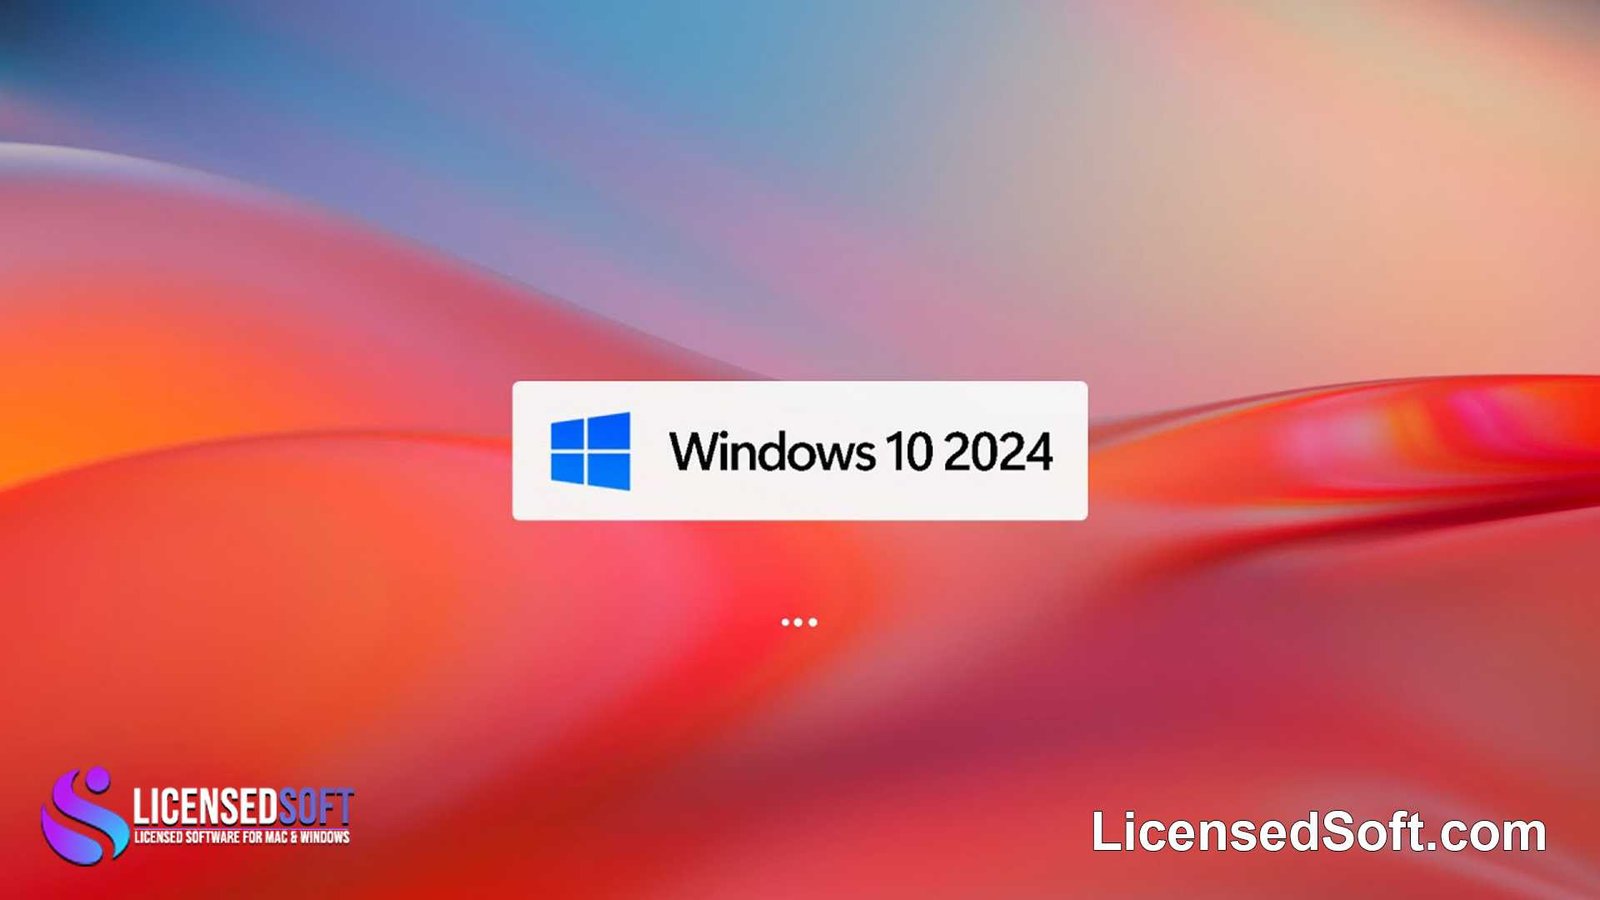 Windows 10 Pro 2024 By LicensedSoft